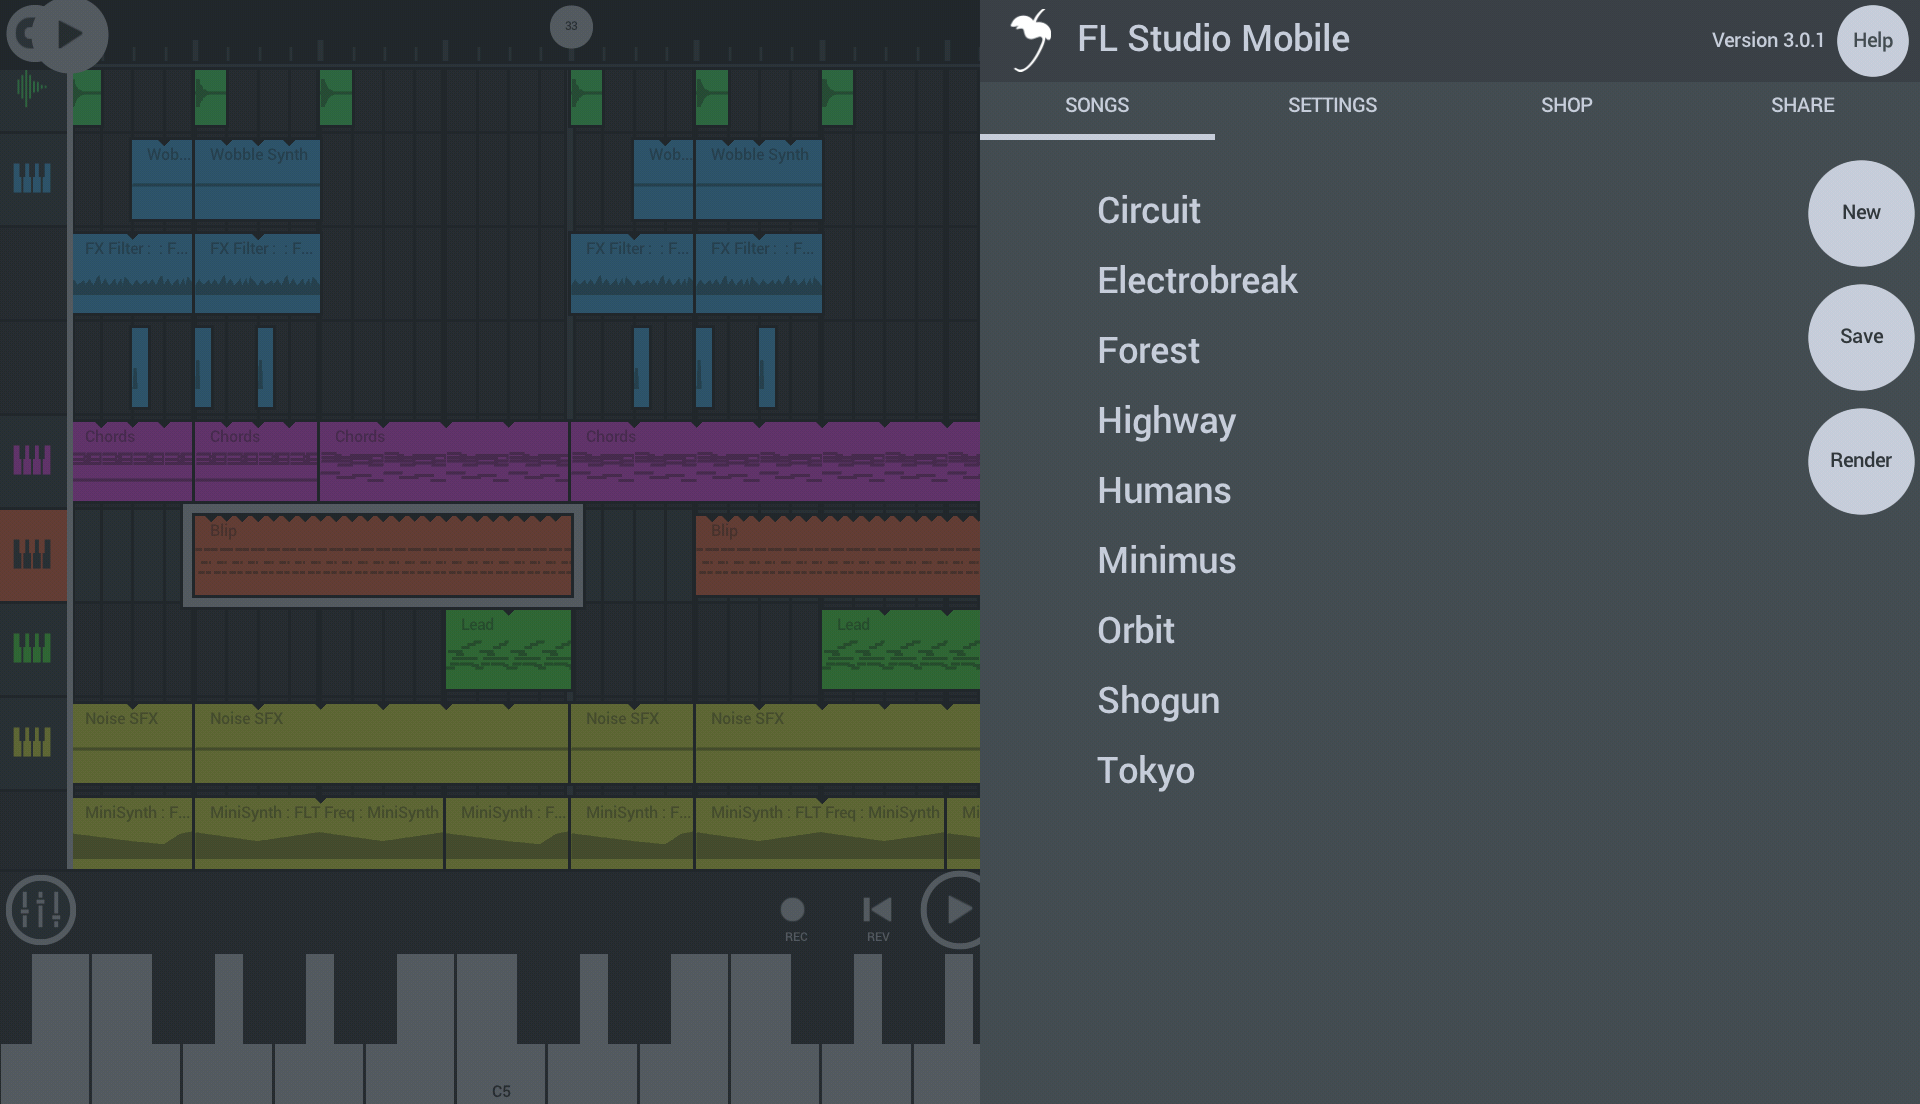 FL Studio Mobile by Image Line - Virtual Studio App